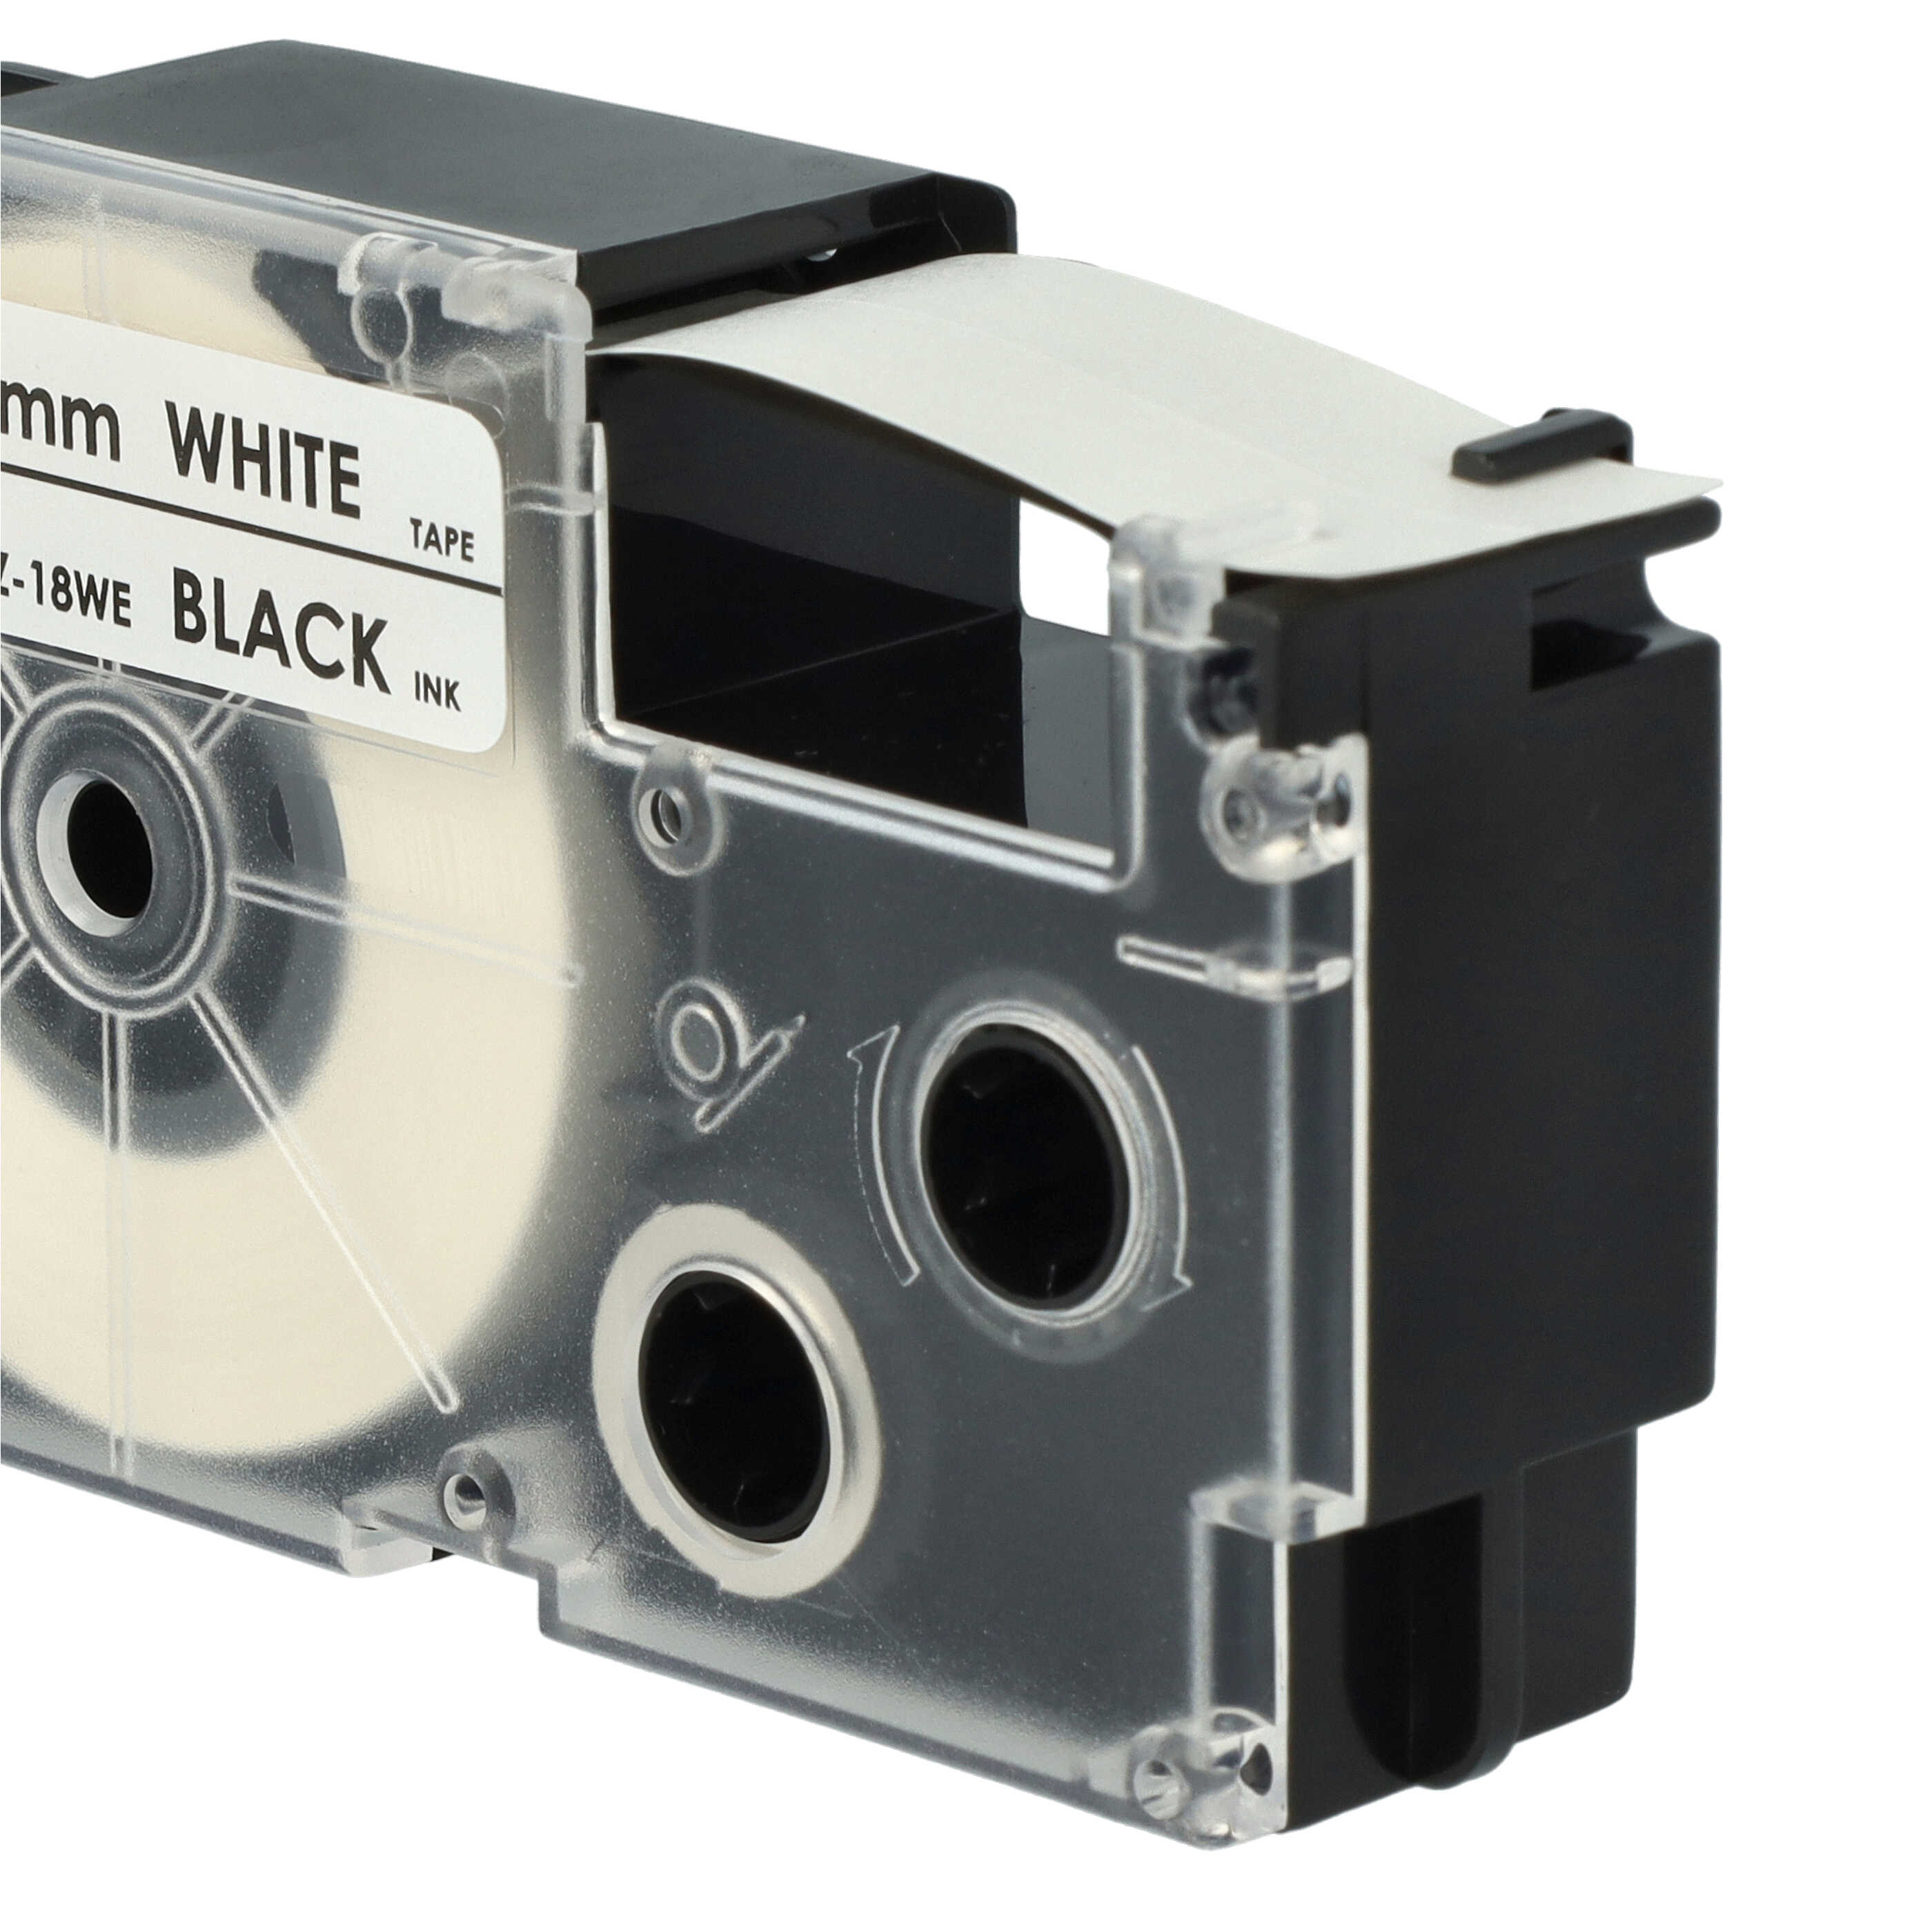 5x Casete cinta escritura reemplaza Casio XR-18WE1, XR-18WE Negro su Blanco